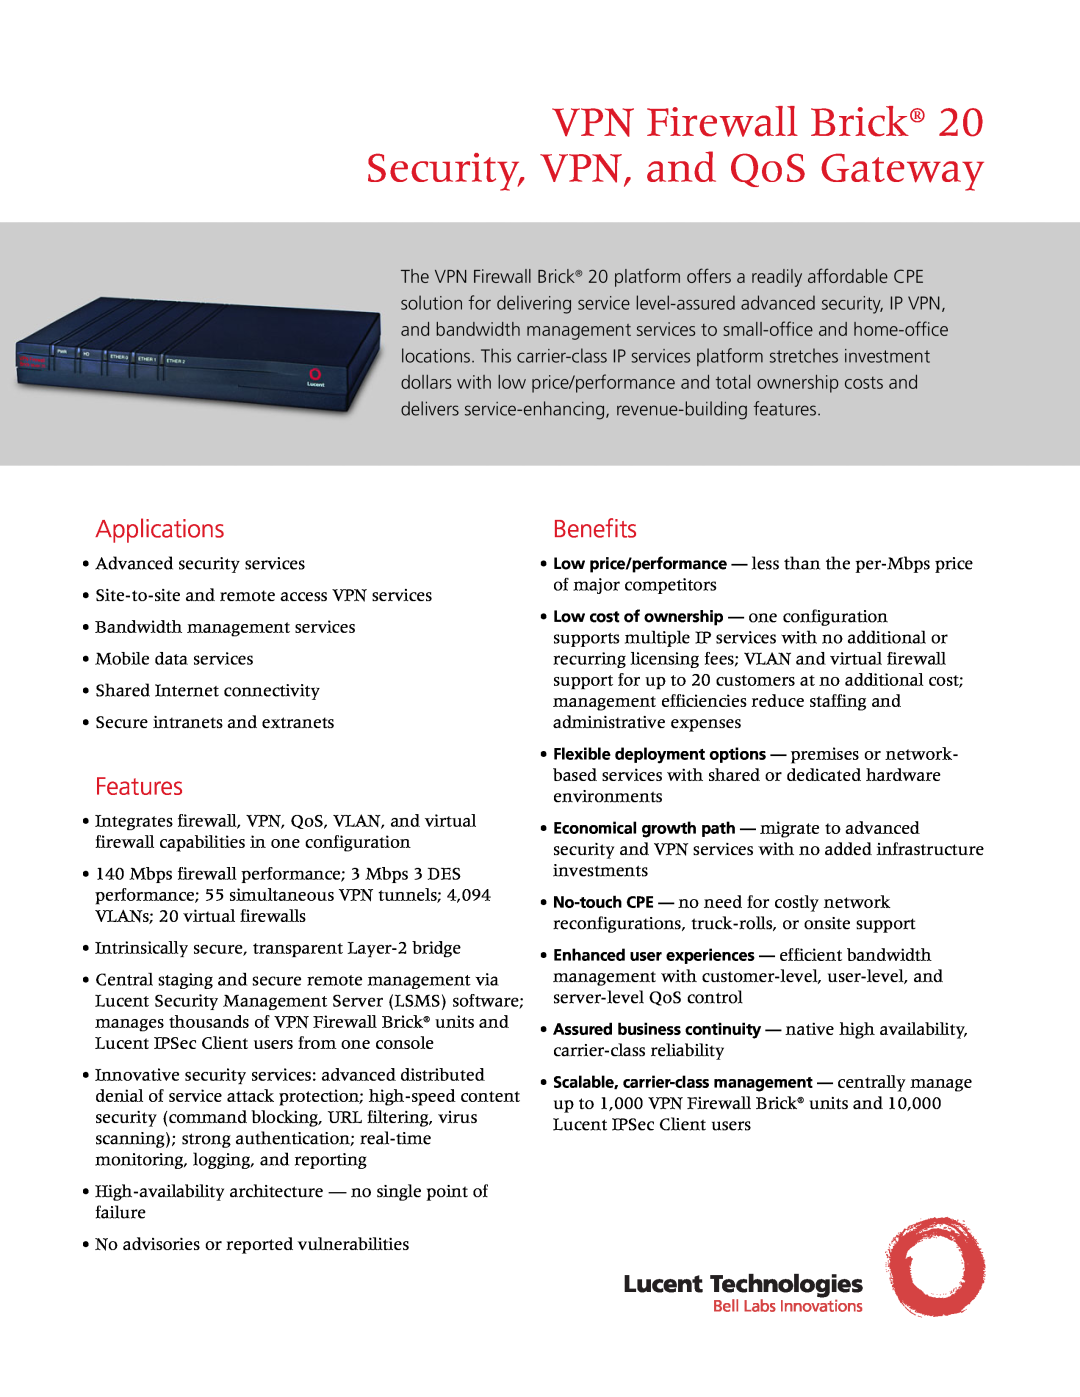 Lucent Technologies VPN Firewall Brick 20 manual Applications, Features, VPN Firewall Brick Security, VPN, and QoS Gateway 